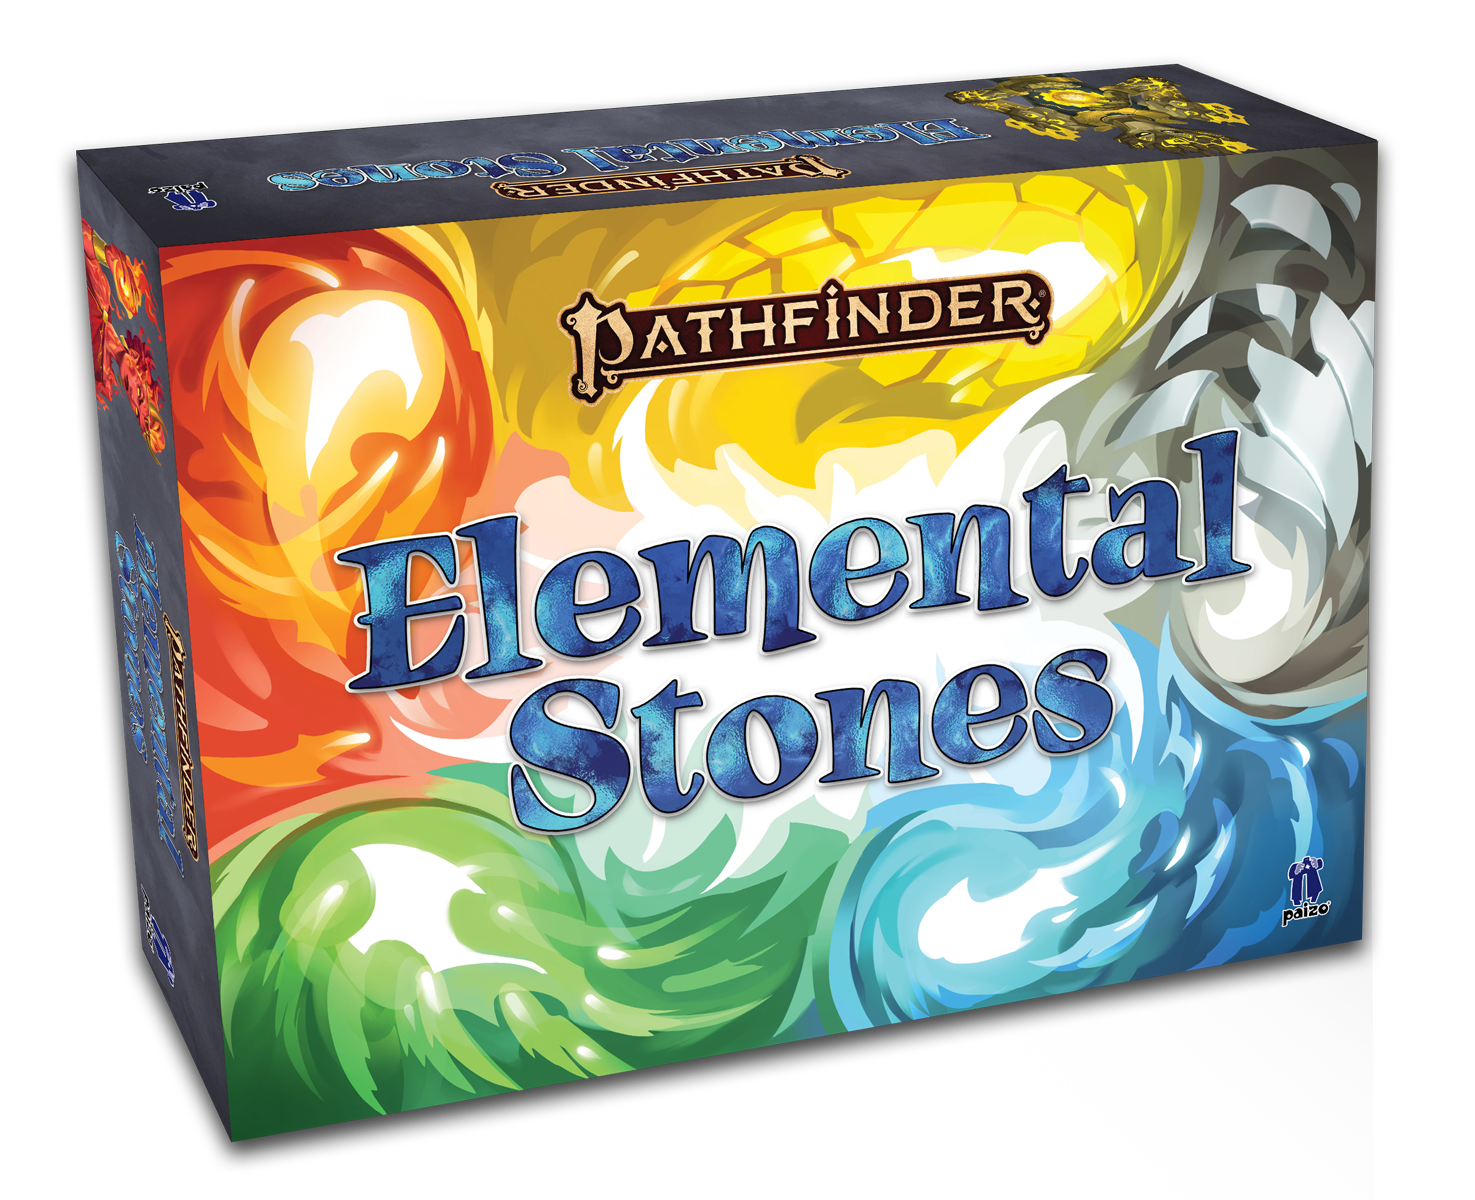 Box Mockup for Elemental Stones